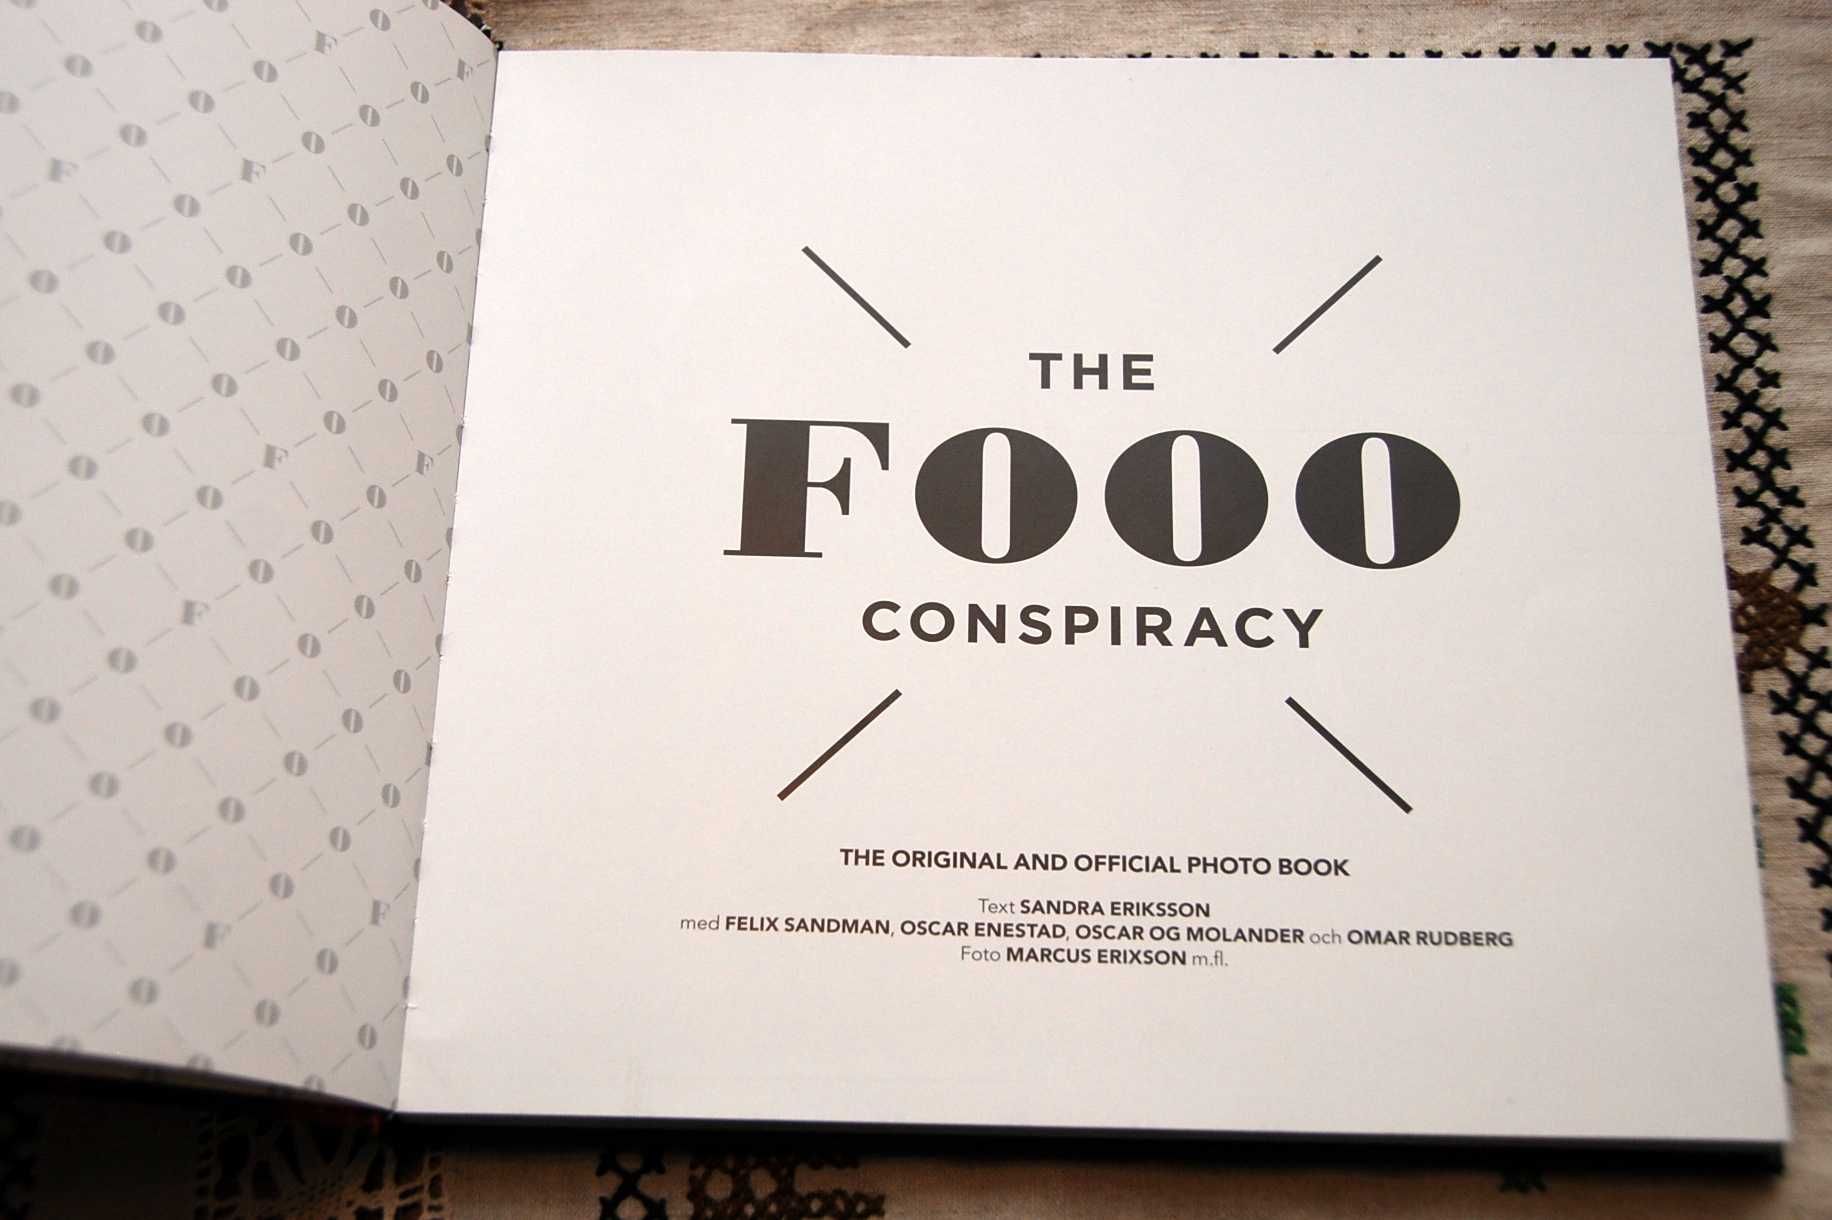 The Fooo Conspiracy Hardcover fotoksiążka